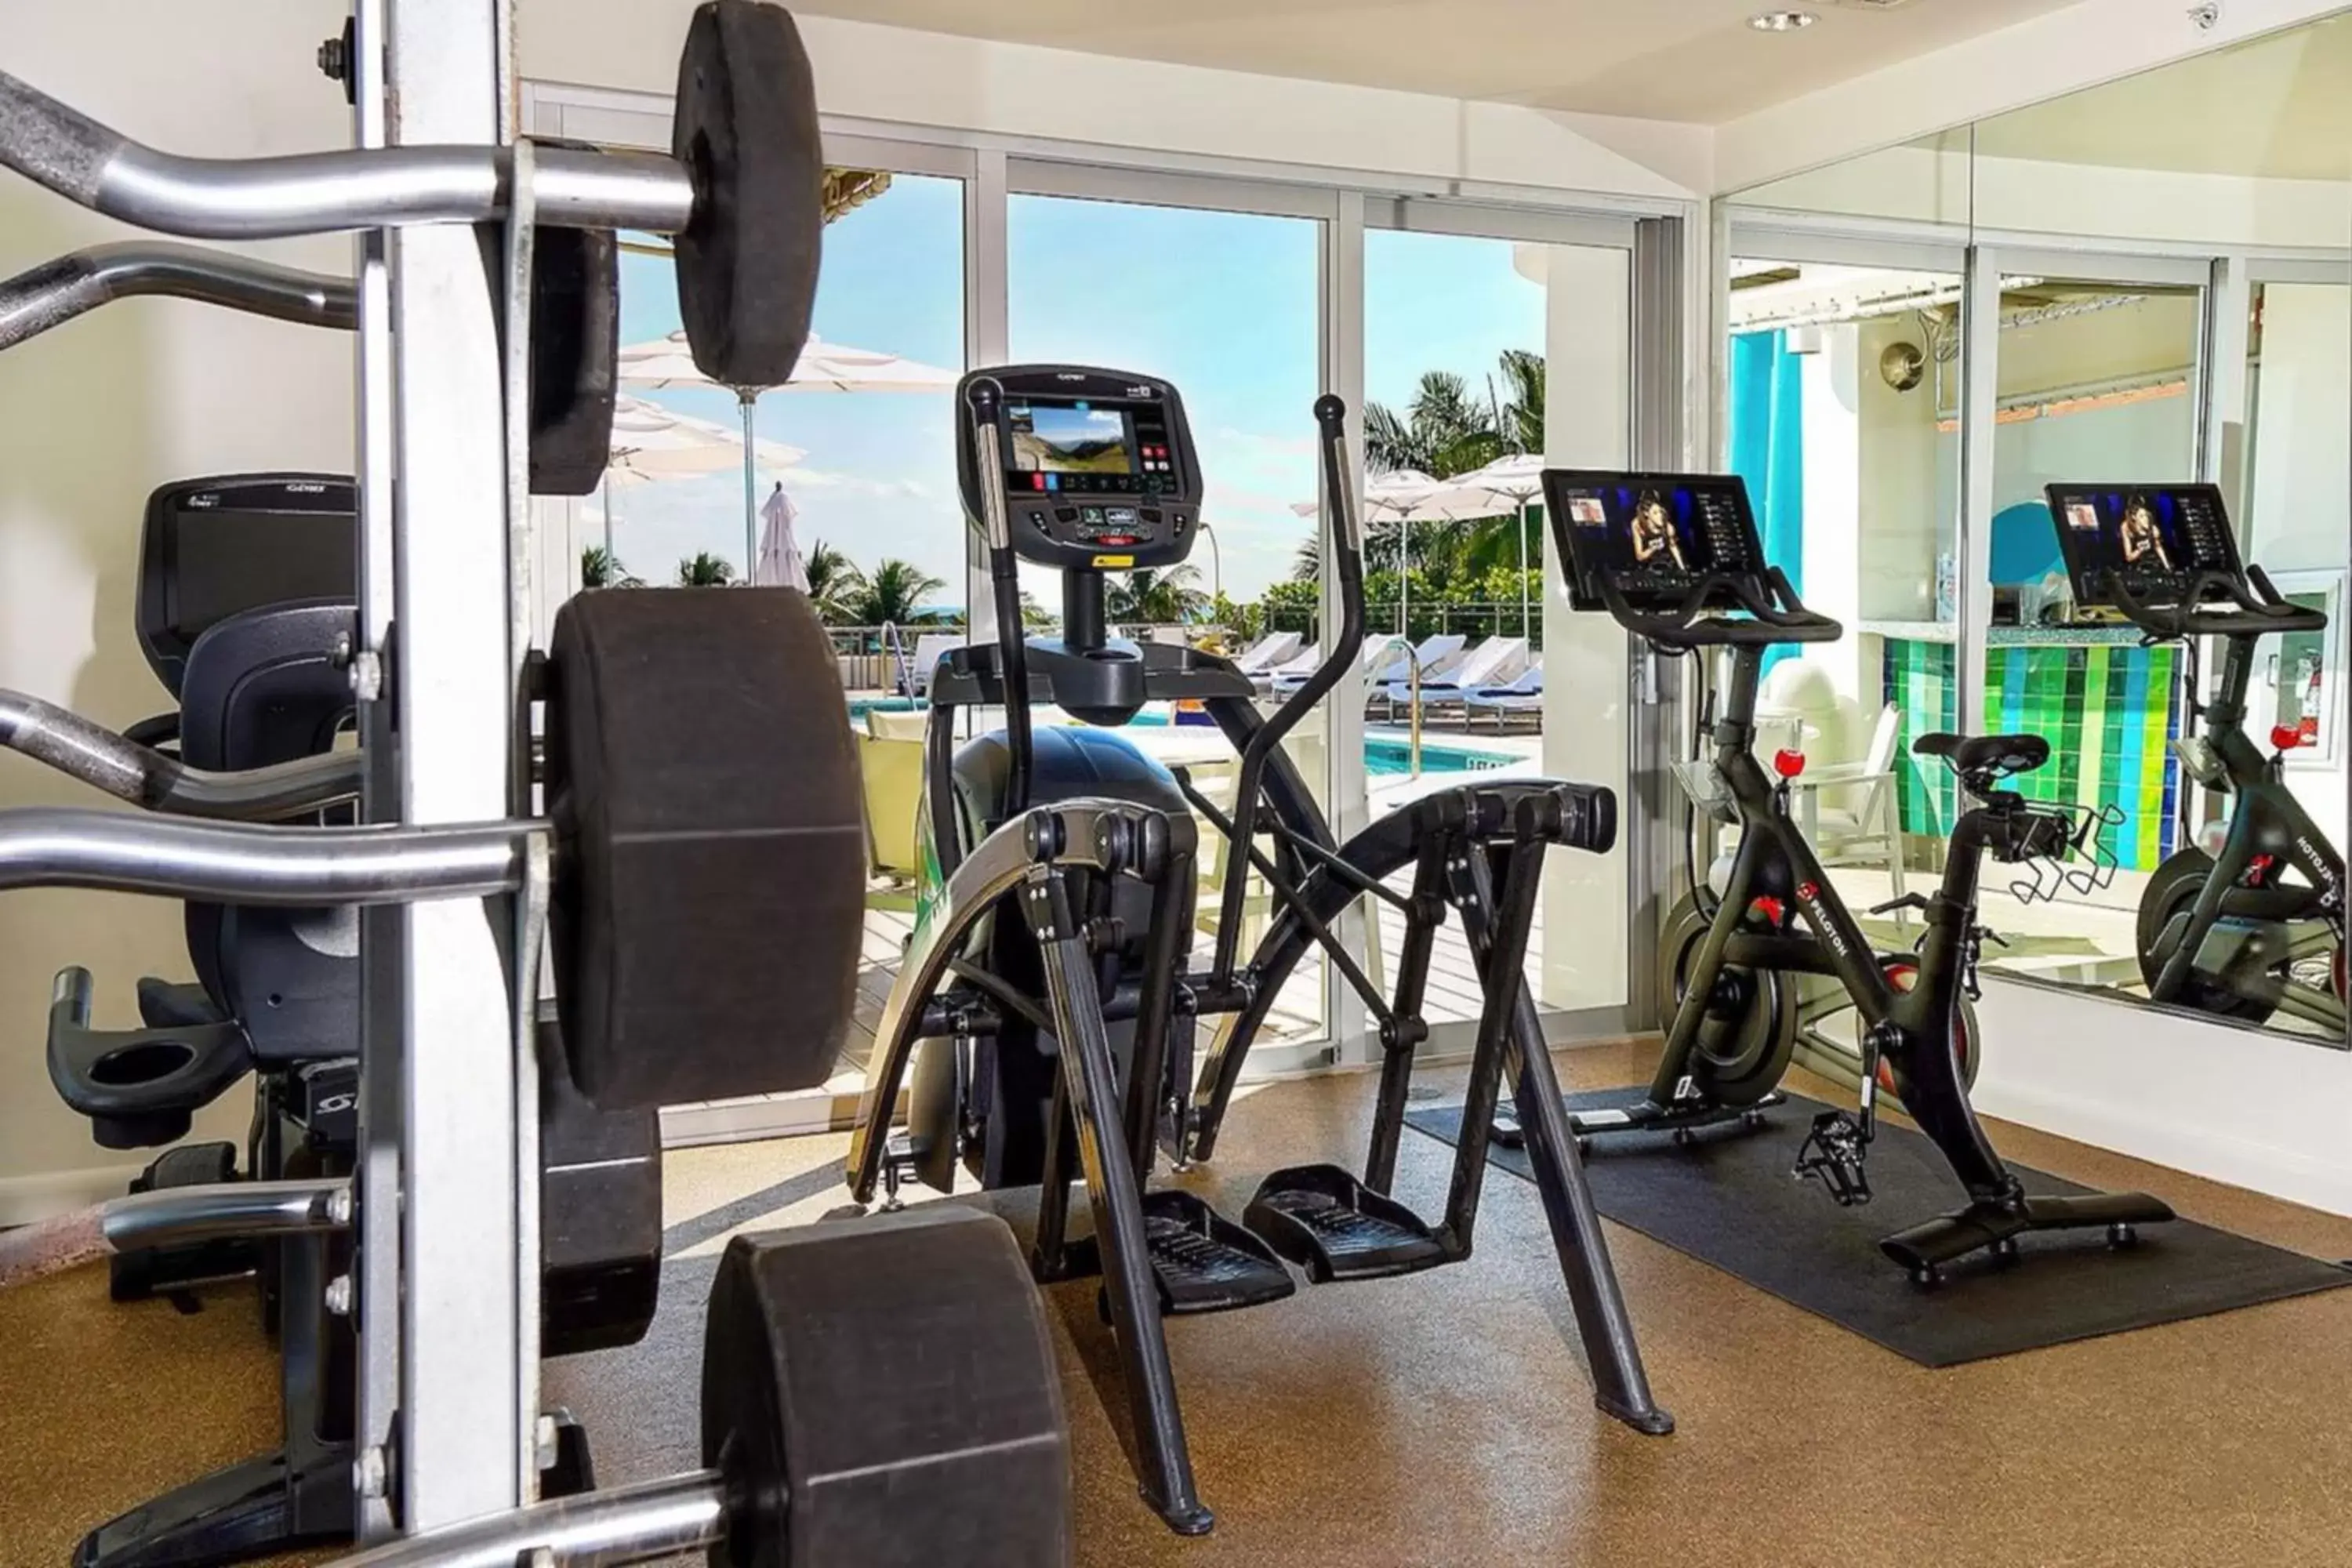 Fitness centre/facilities, Fitness Center/Facilities in The Tony Hotel South Beach